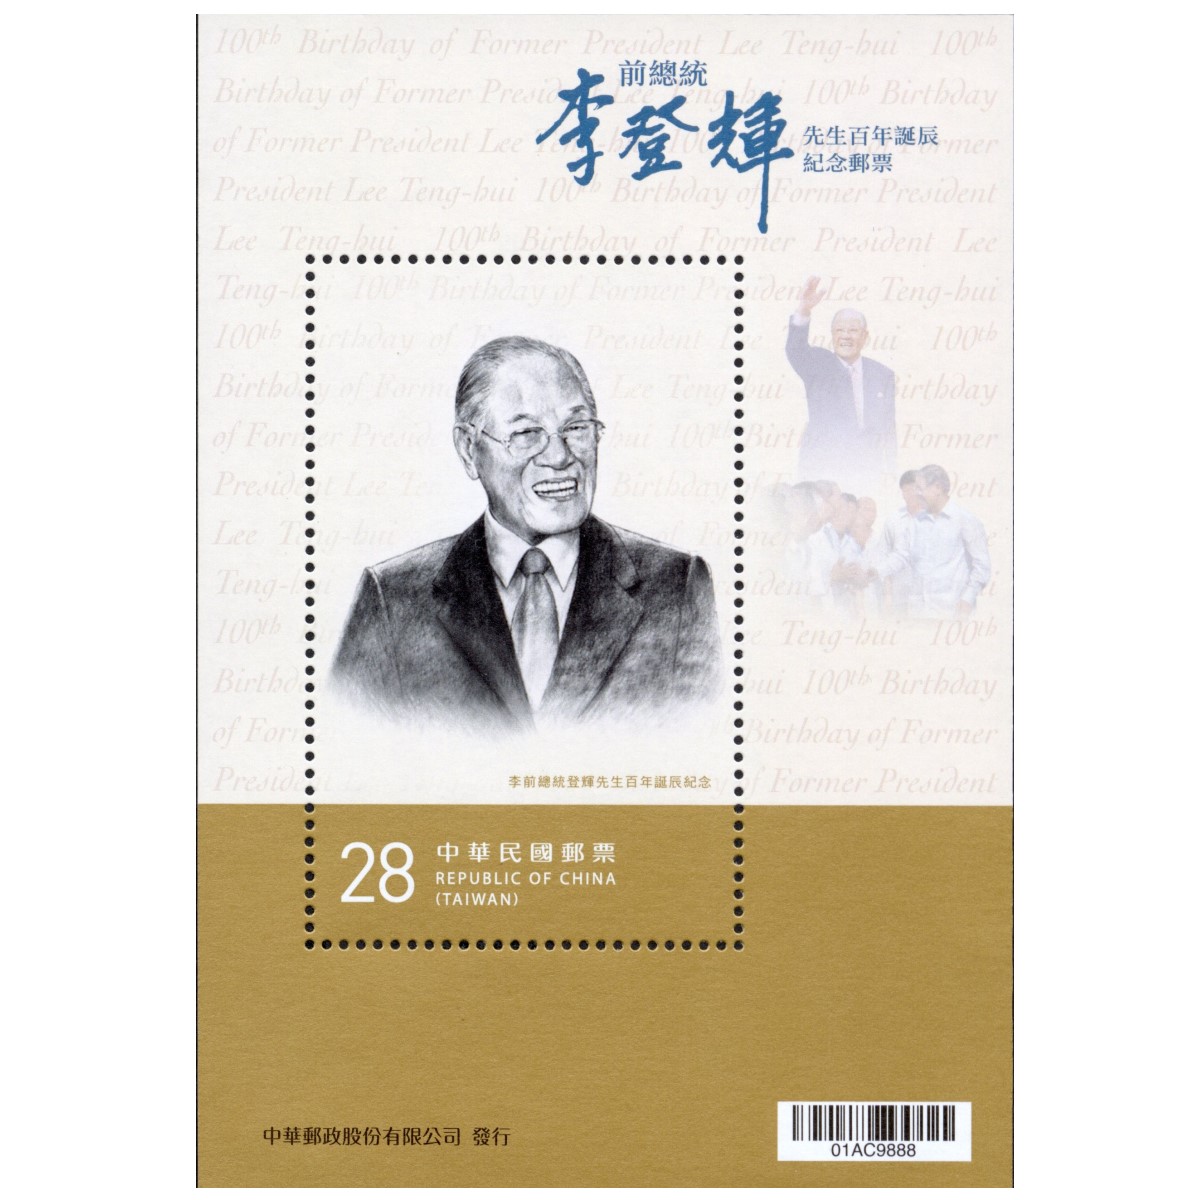 100th Birthday of Former President Lee Teng-hui Commemorative Souvenir Sheet 